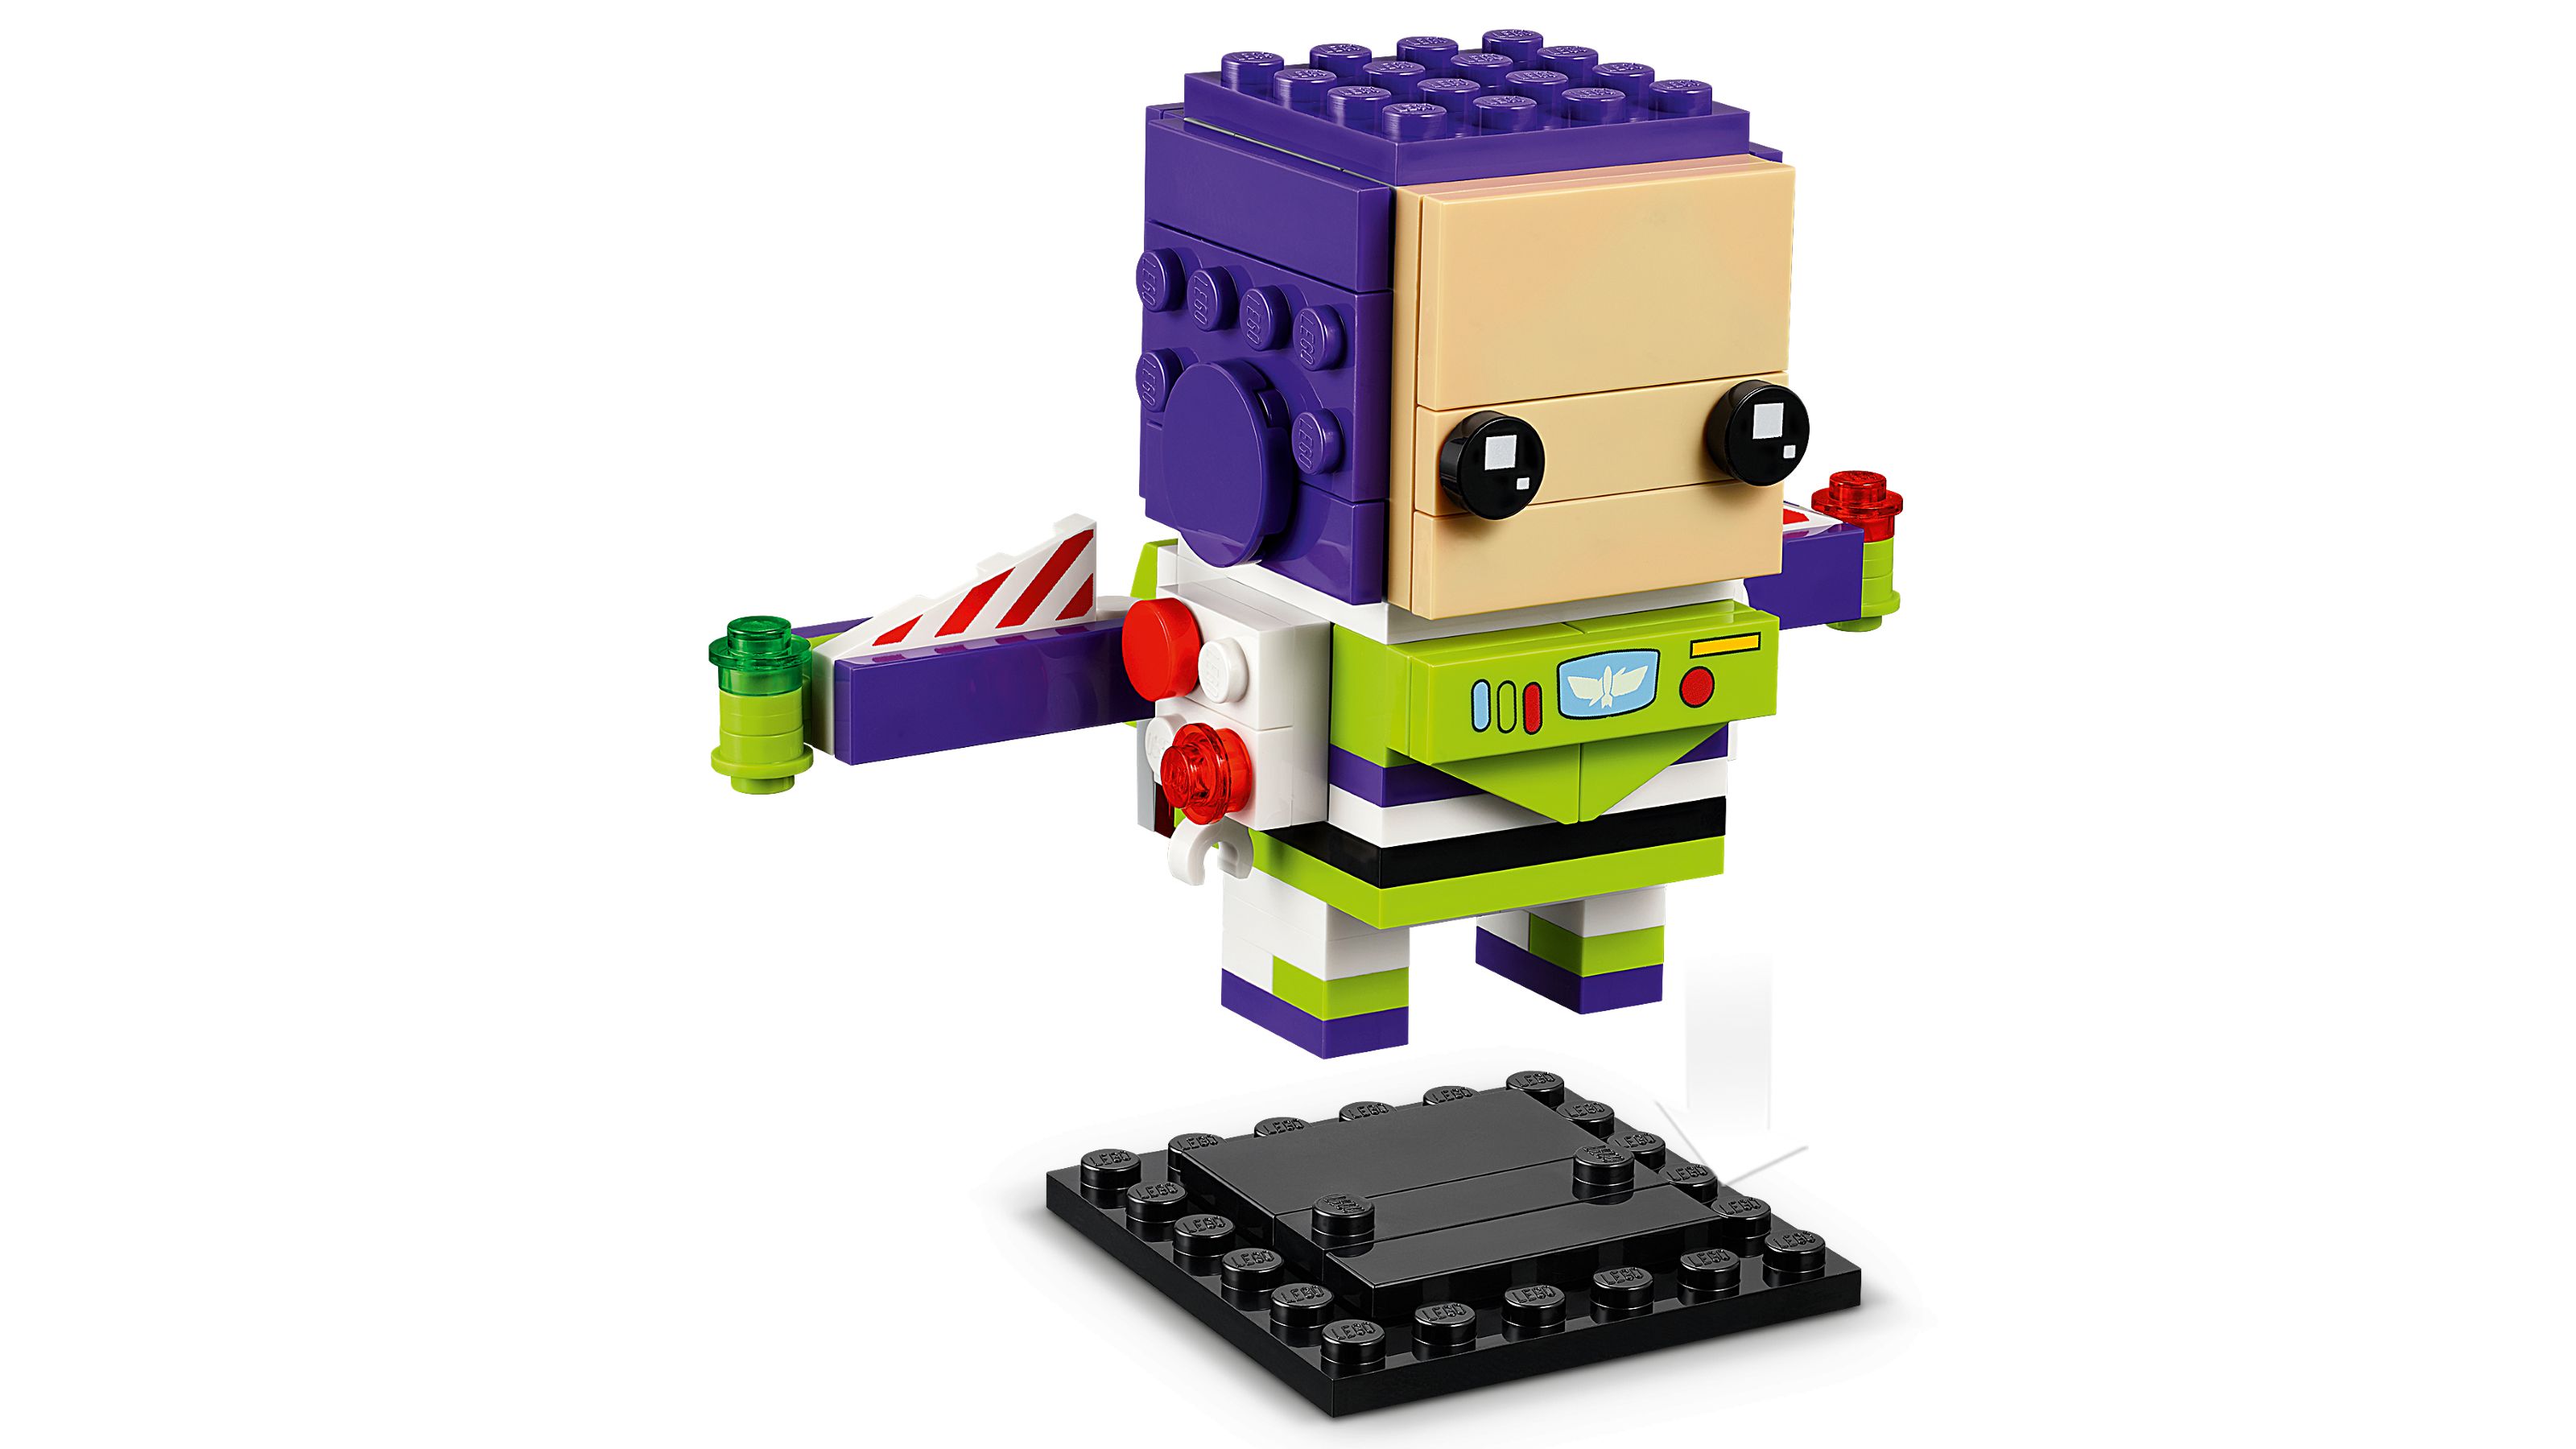 LEGO BrickHeadz 40552 Buzz Lightyear LEGO_40552_alt2.jpg